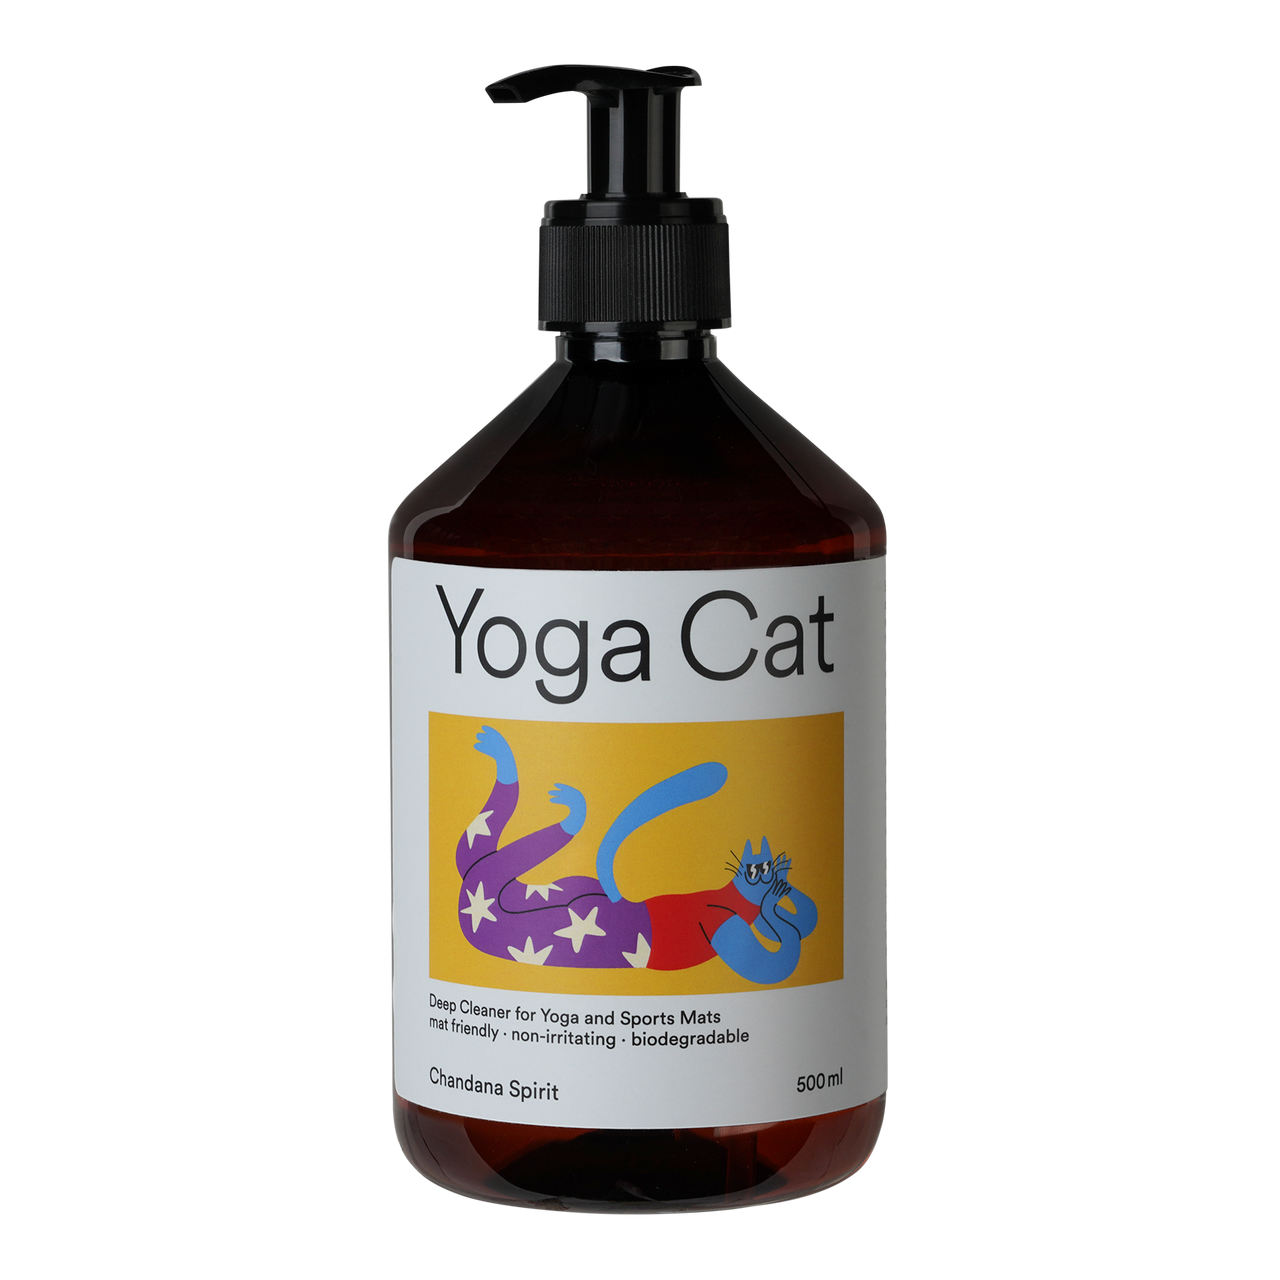 disinfectant spray, chandana spirit, yoga cat, cleaning spray, antibacterial spray, yoga studio supplies, aromatherapy spray, environmentally friendly, non-toxic disinfectant